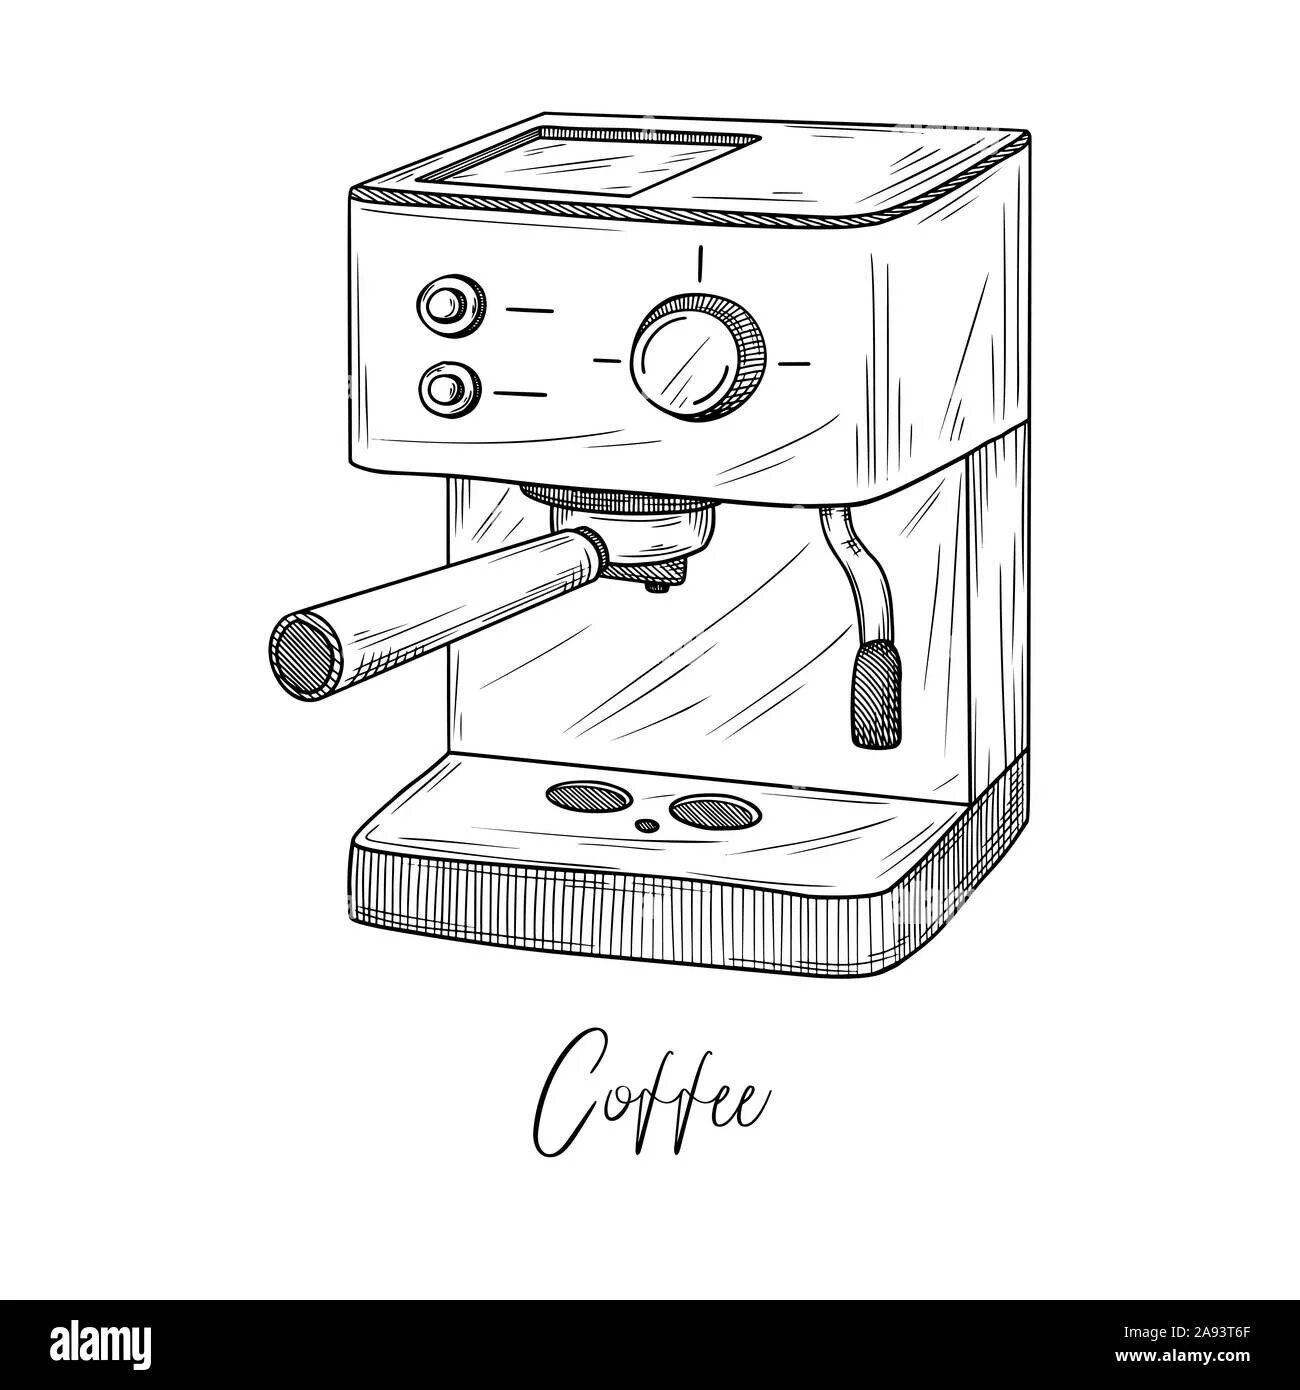 Coffee machine #12